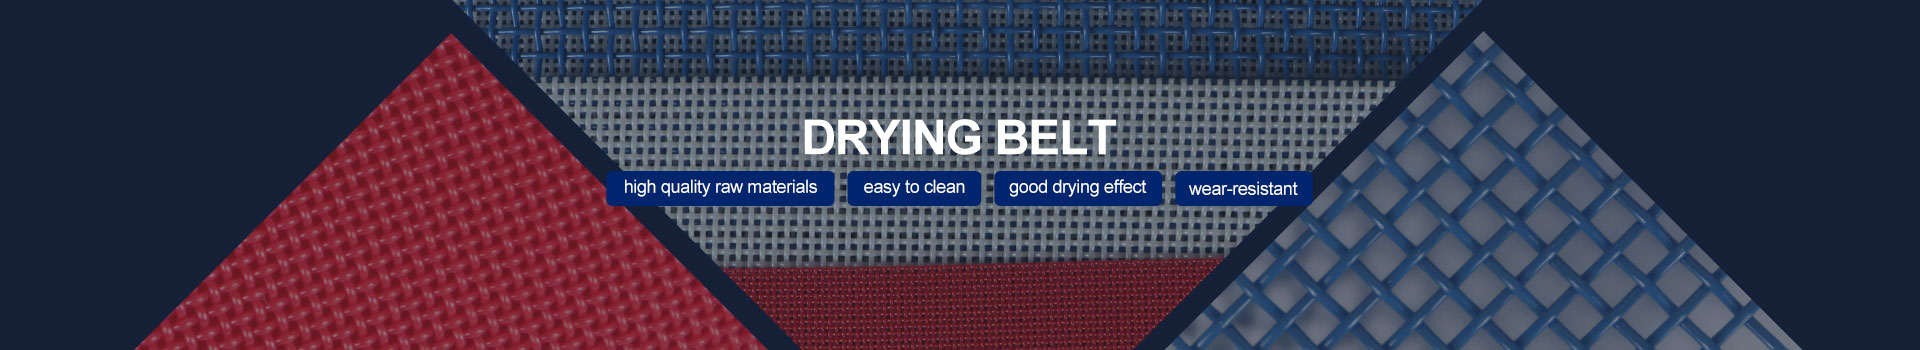 drying belt